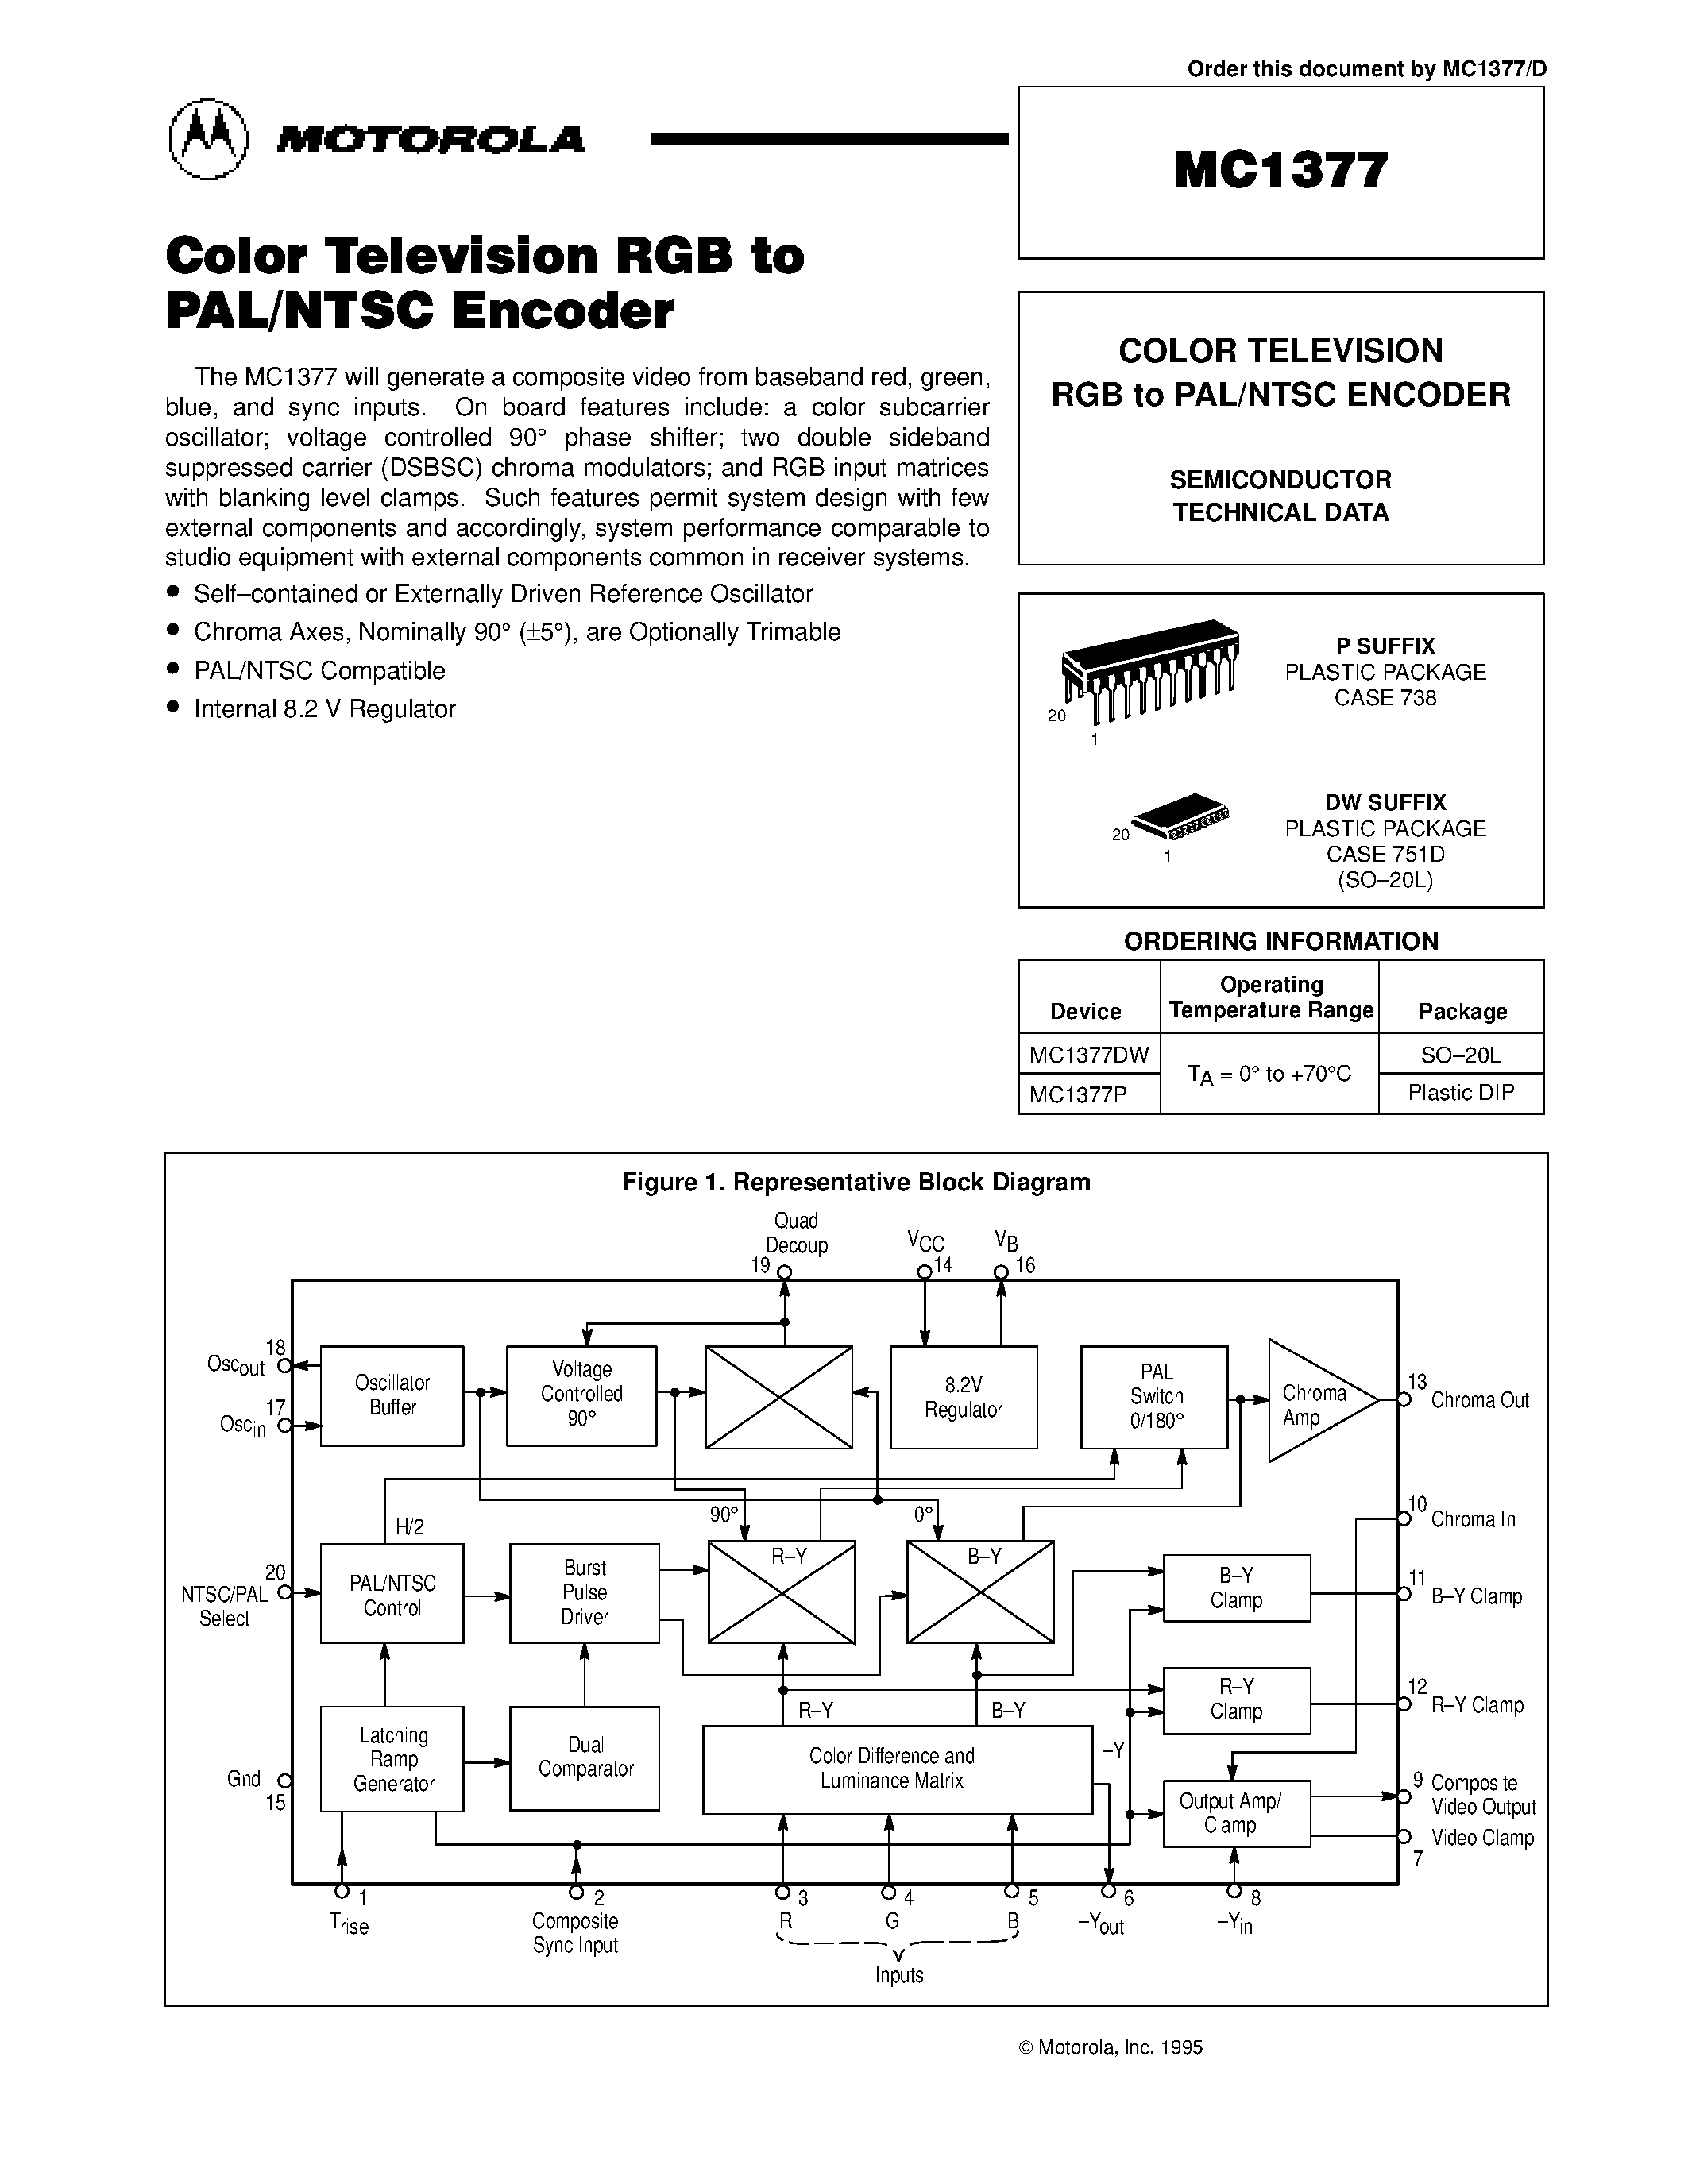 Datasheet MC1377P - COLOR TELEVISION RGB to PAL/NTSC ENCODER page 1